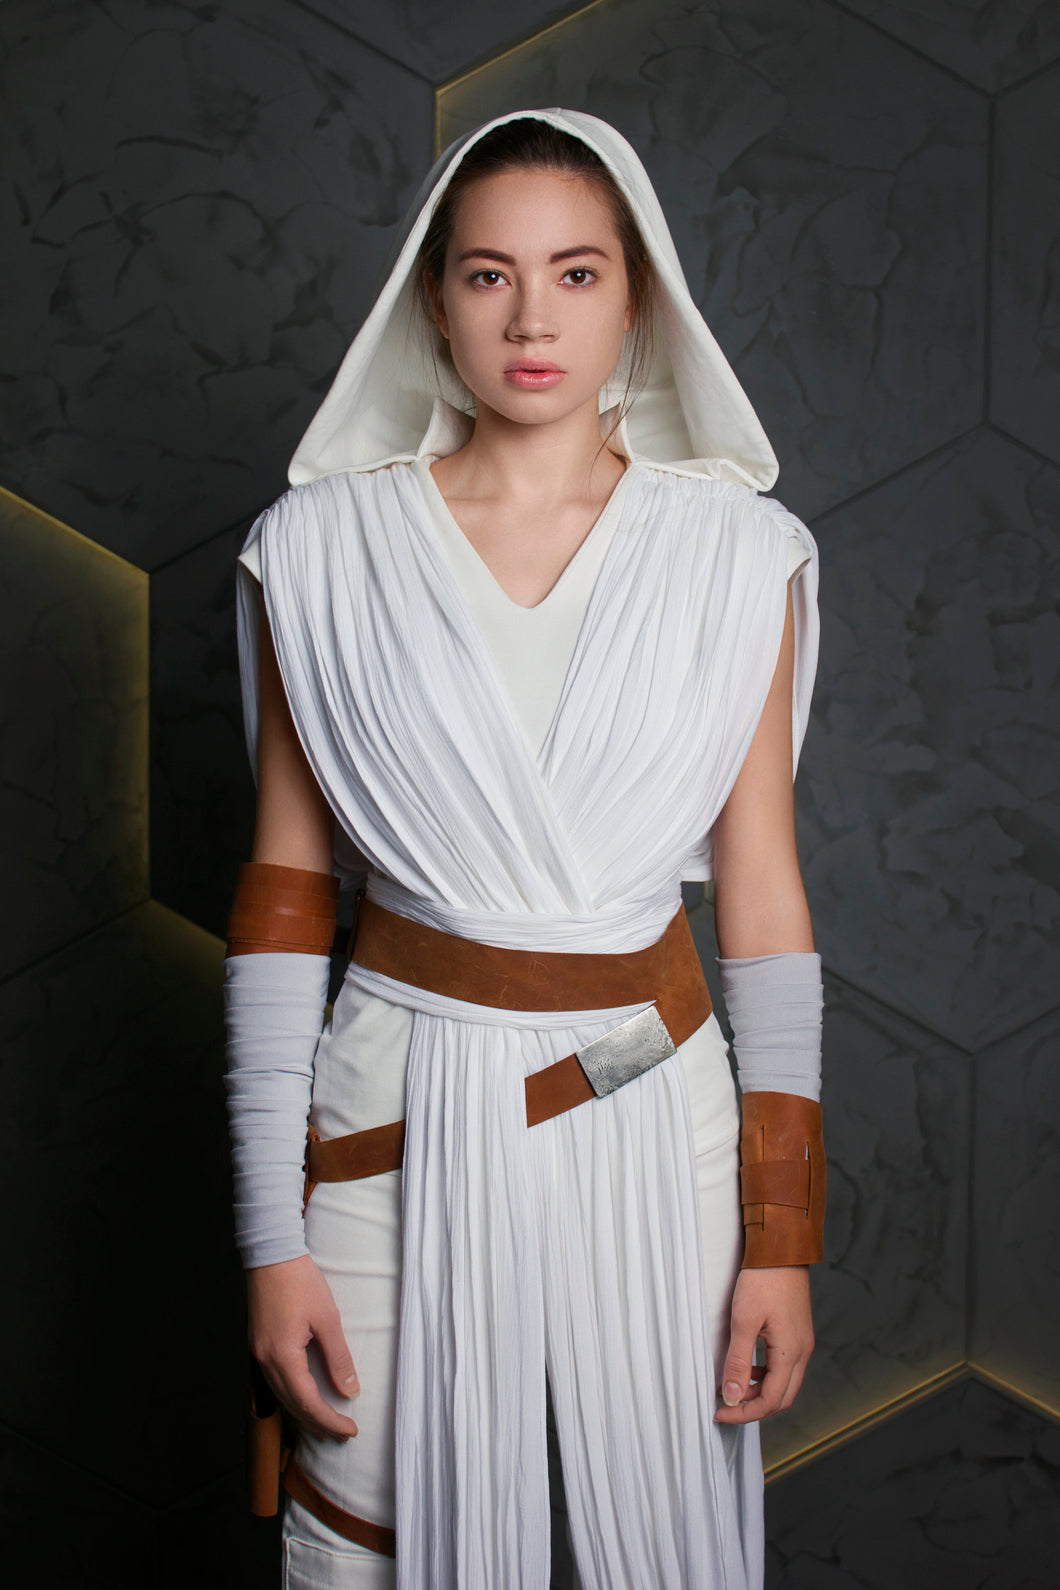 Rey Skywalker Cosplay costume from Star Saga jedi master rebels legion power of the force resistance alliance light side undershirt